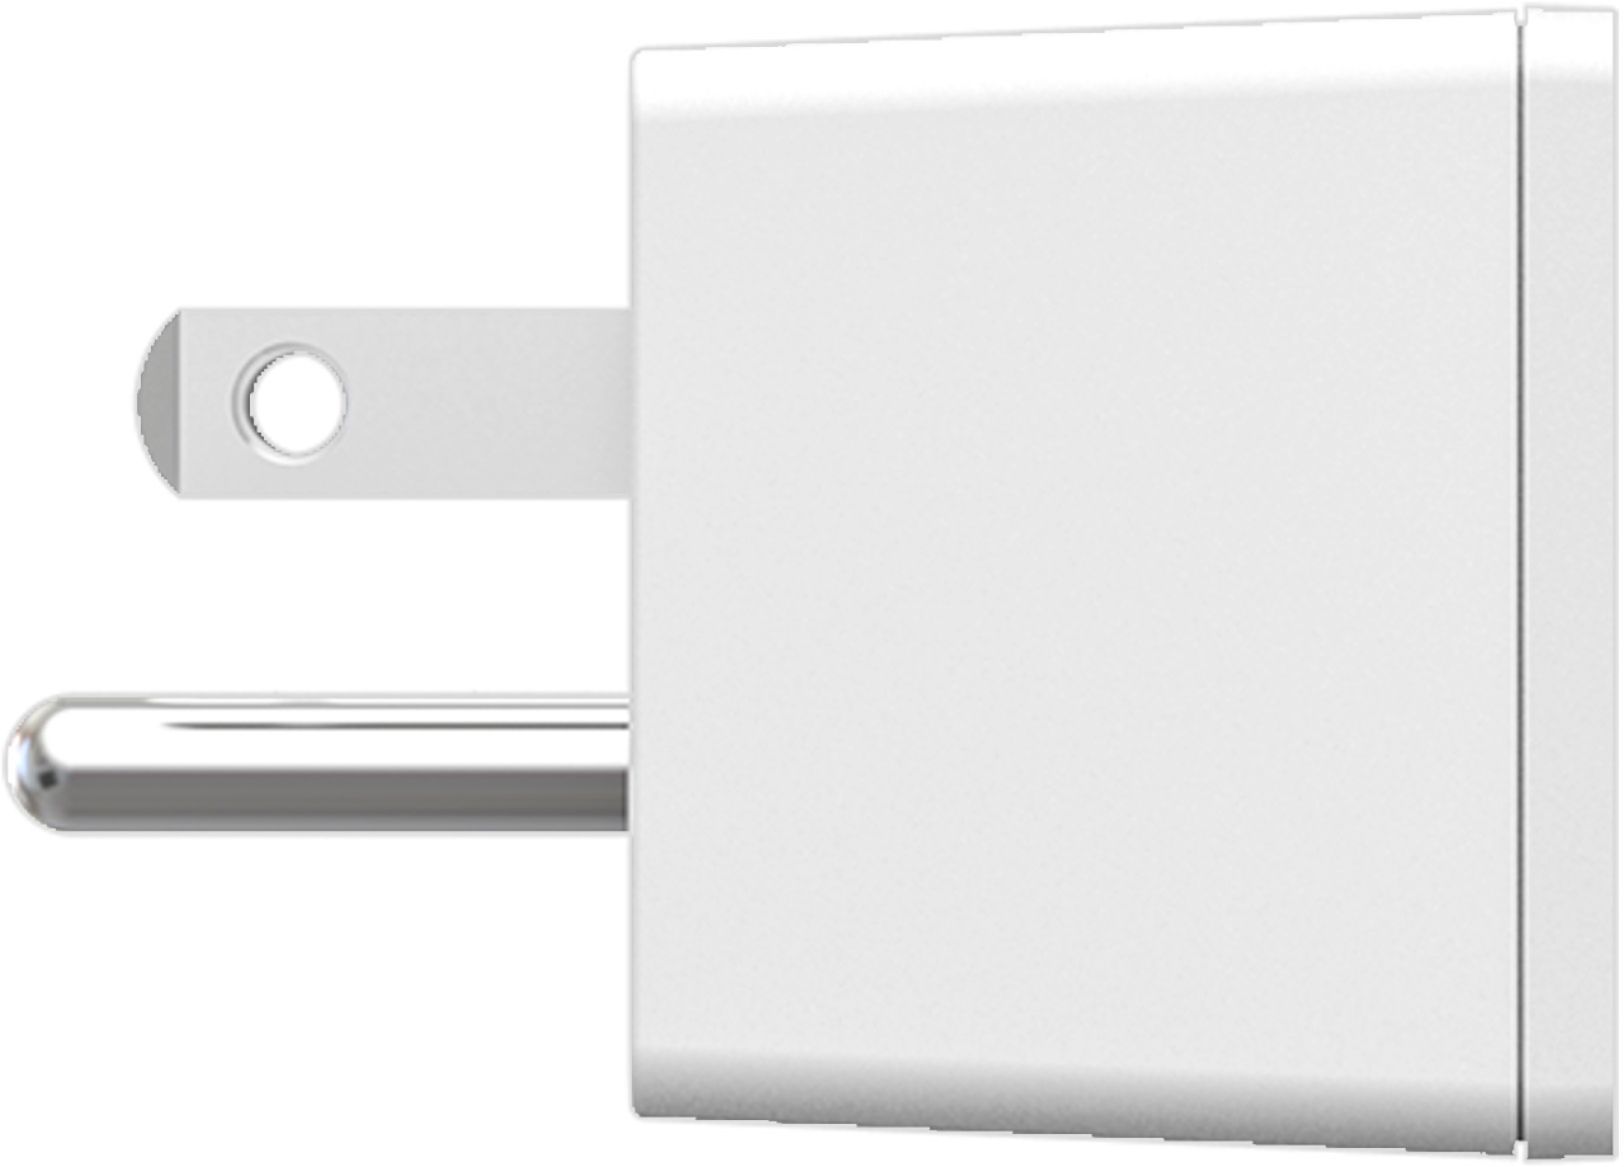 WeMo Mini WiFi Smart Plug White F7C063 - Best Buy